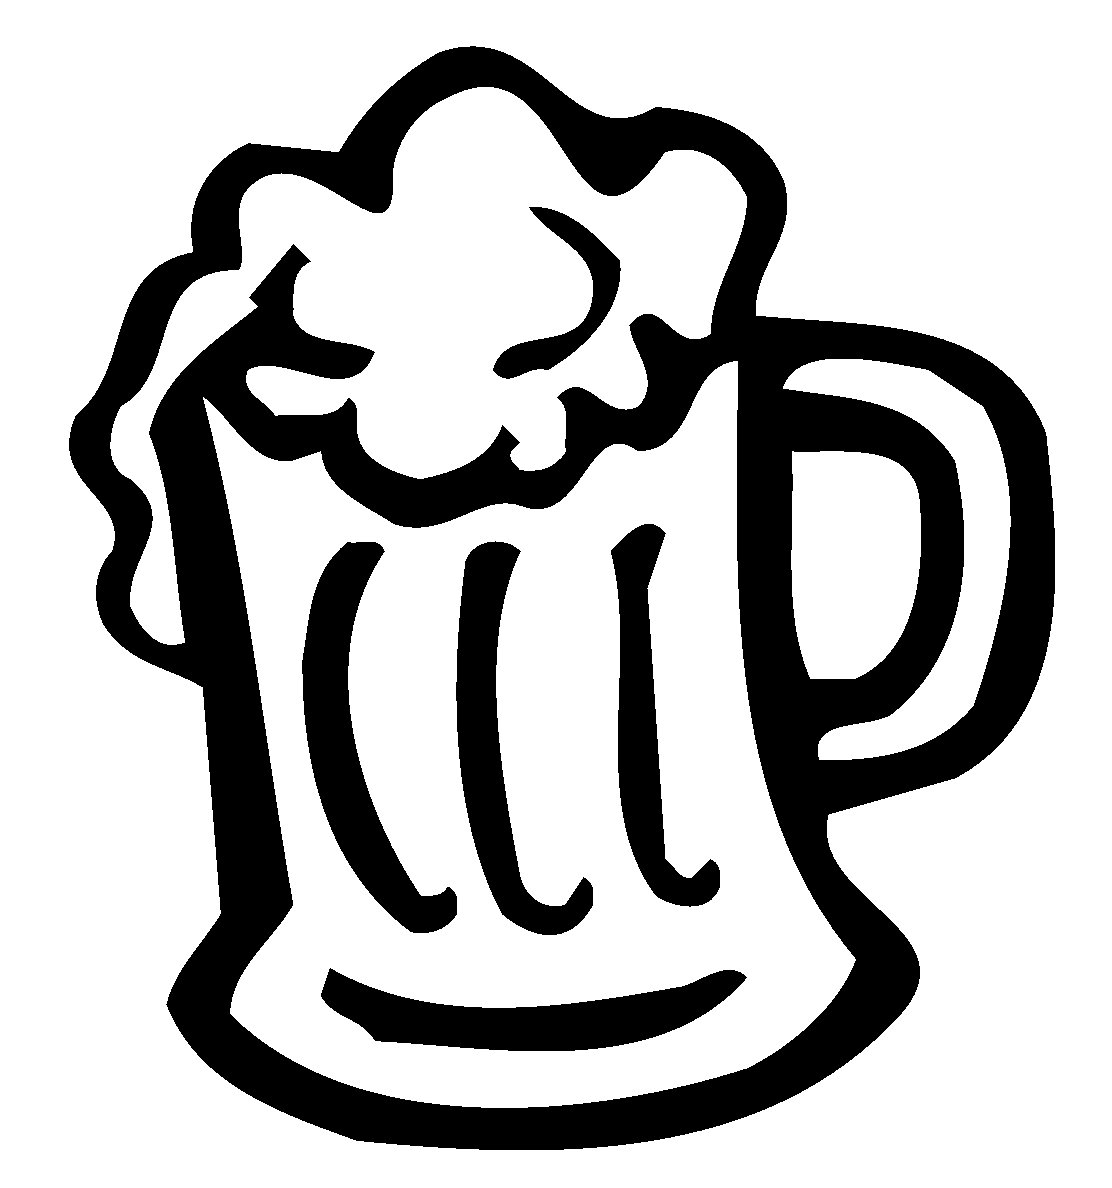 Beer mug graphic free clipart 